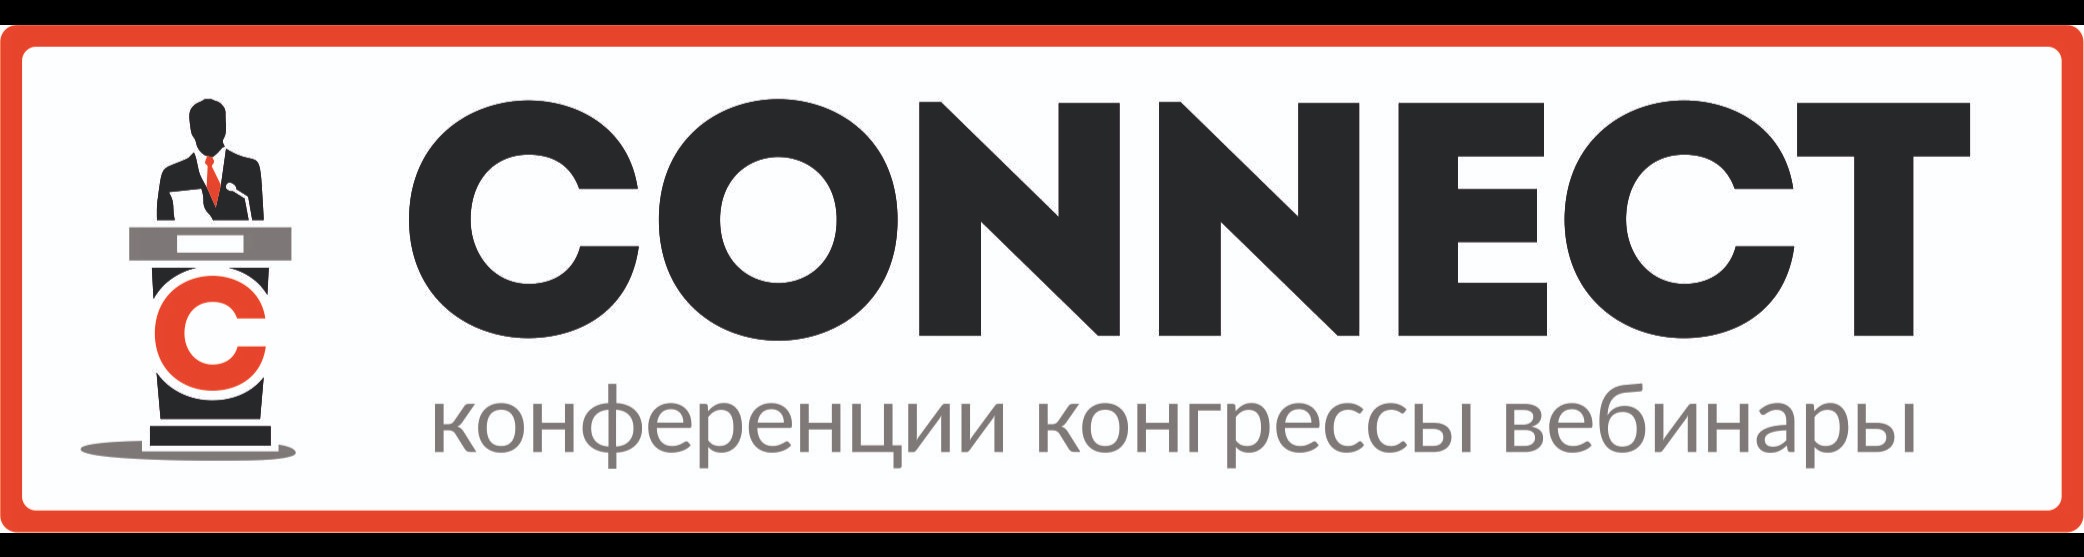 Connect company. ООО Коннект. Логотип коннекта. ООО «ру Коннект». Логотип топ Коннект.